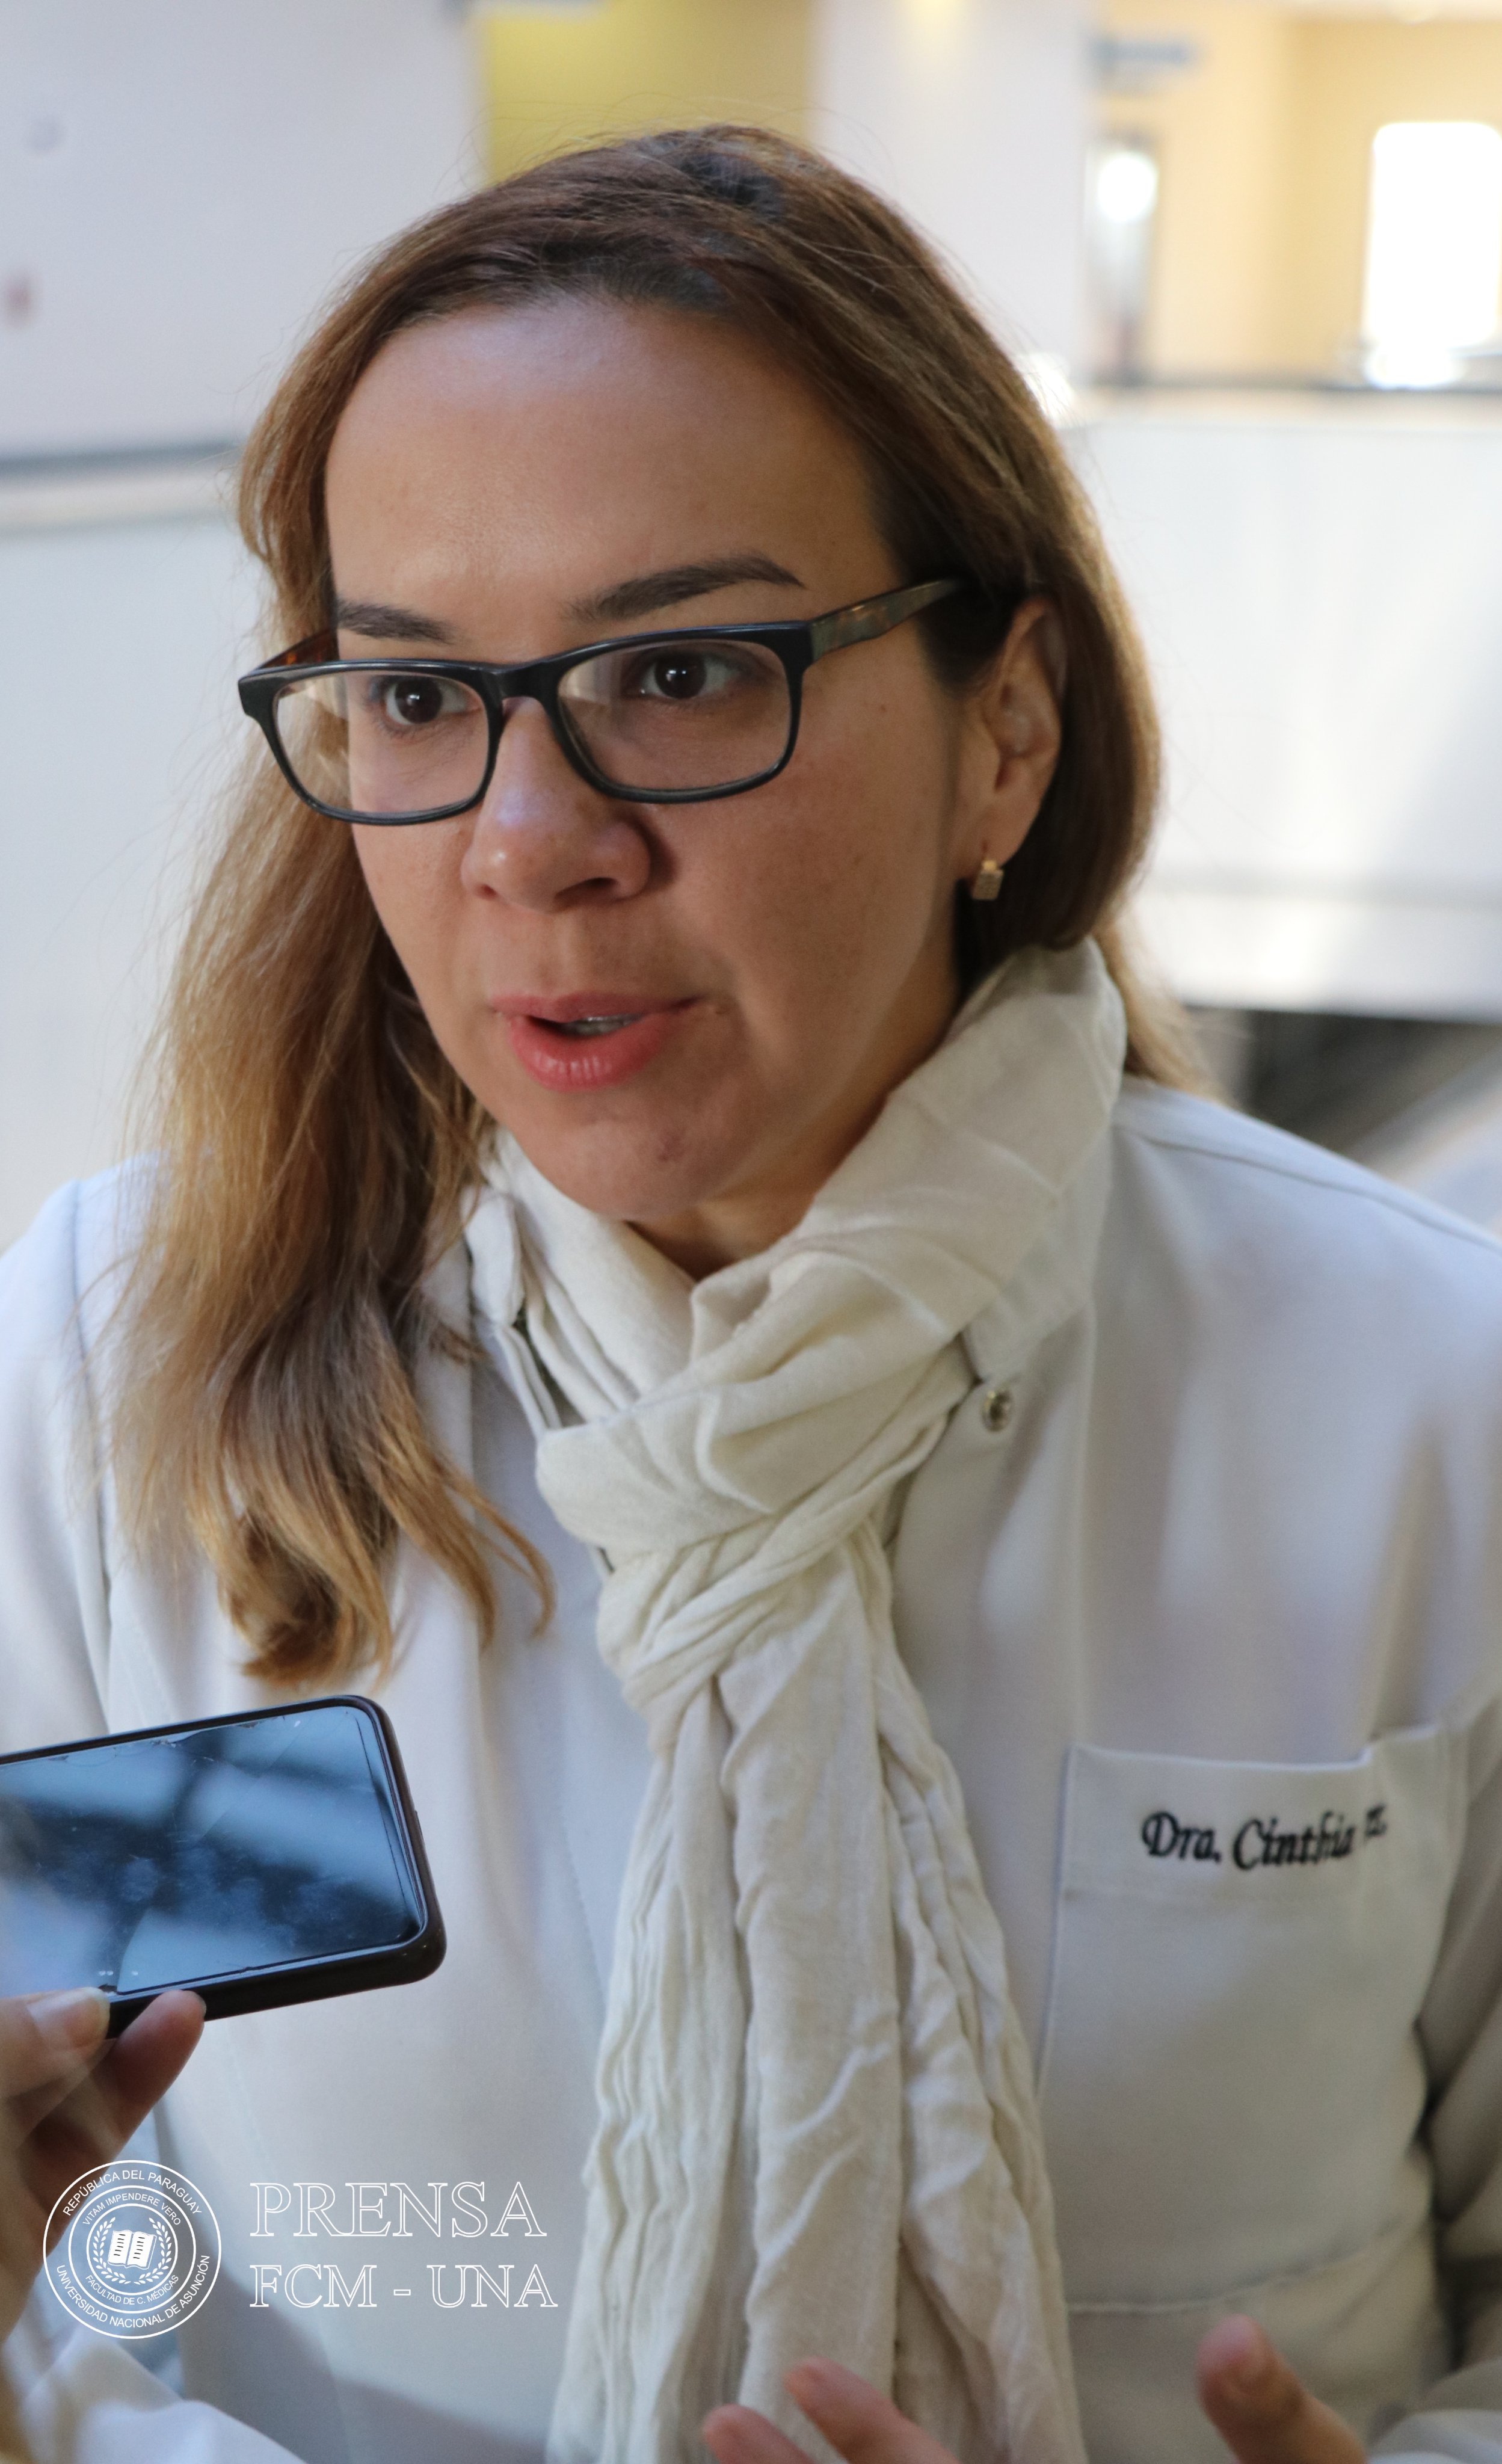 Dra. Cinthia Pérez, alergóloga y pediatra de la Cátedra de la FCM-UNA